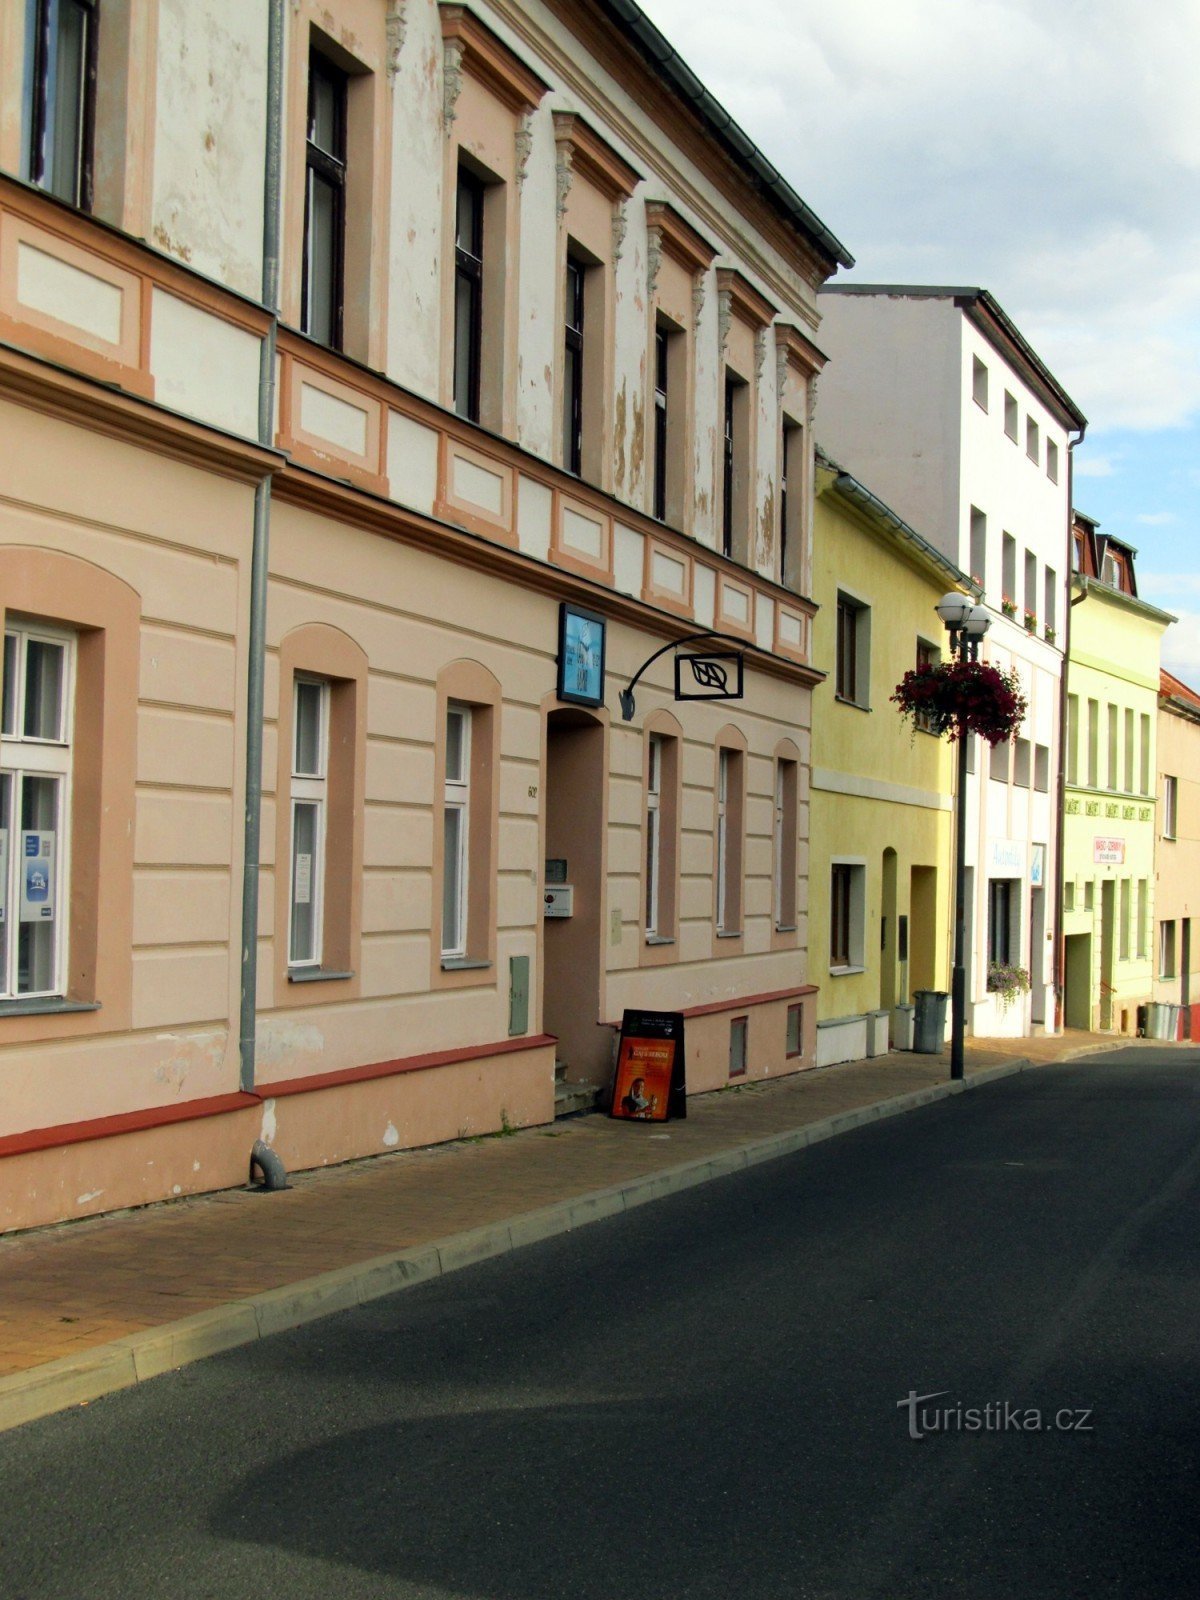 La casa en la calle Jirásková en Kadani, donde se encuentra la casa de té Kashmír